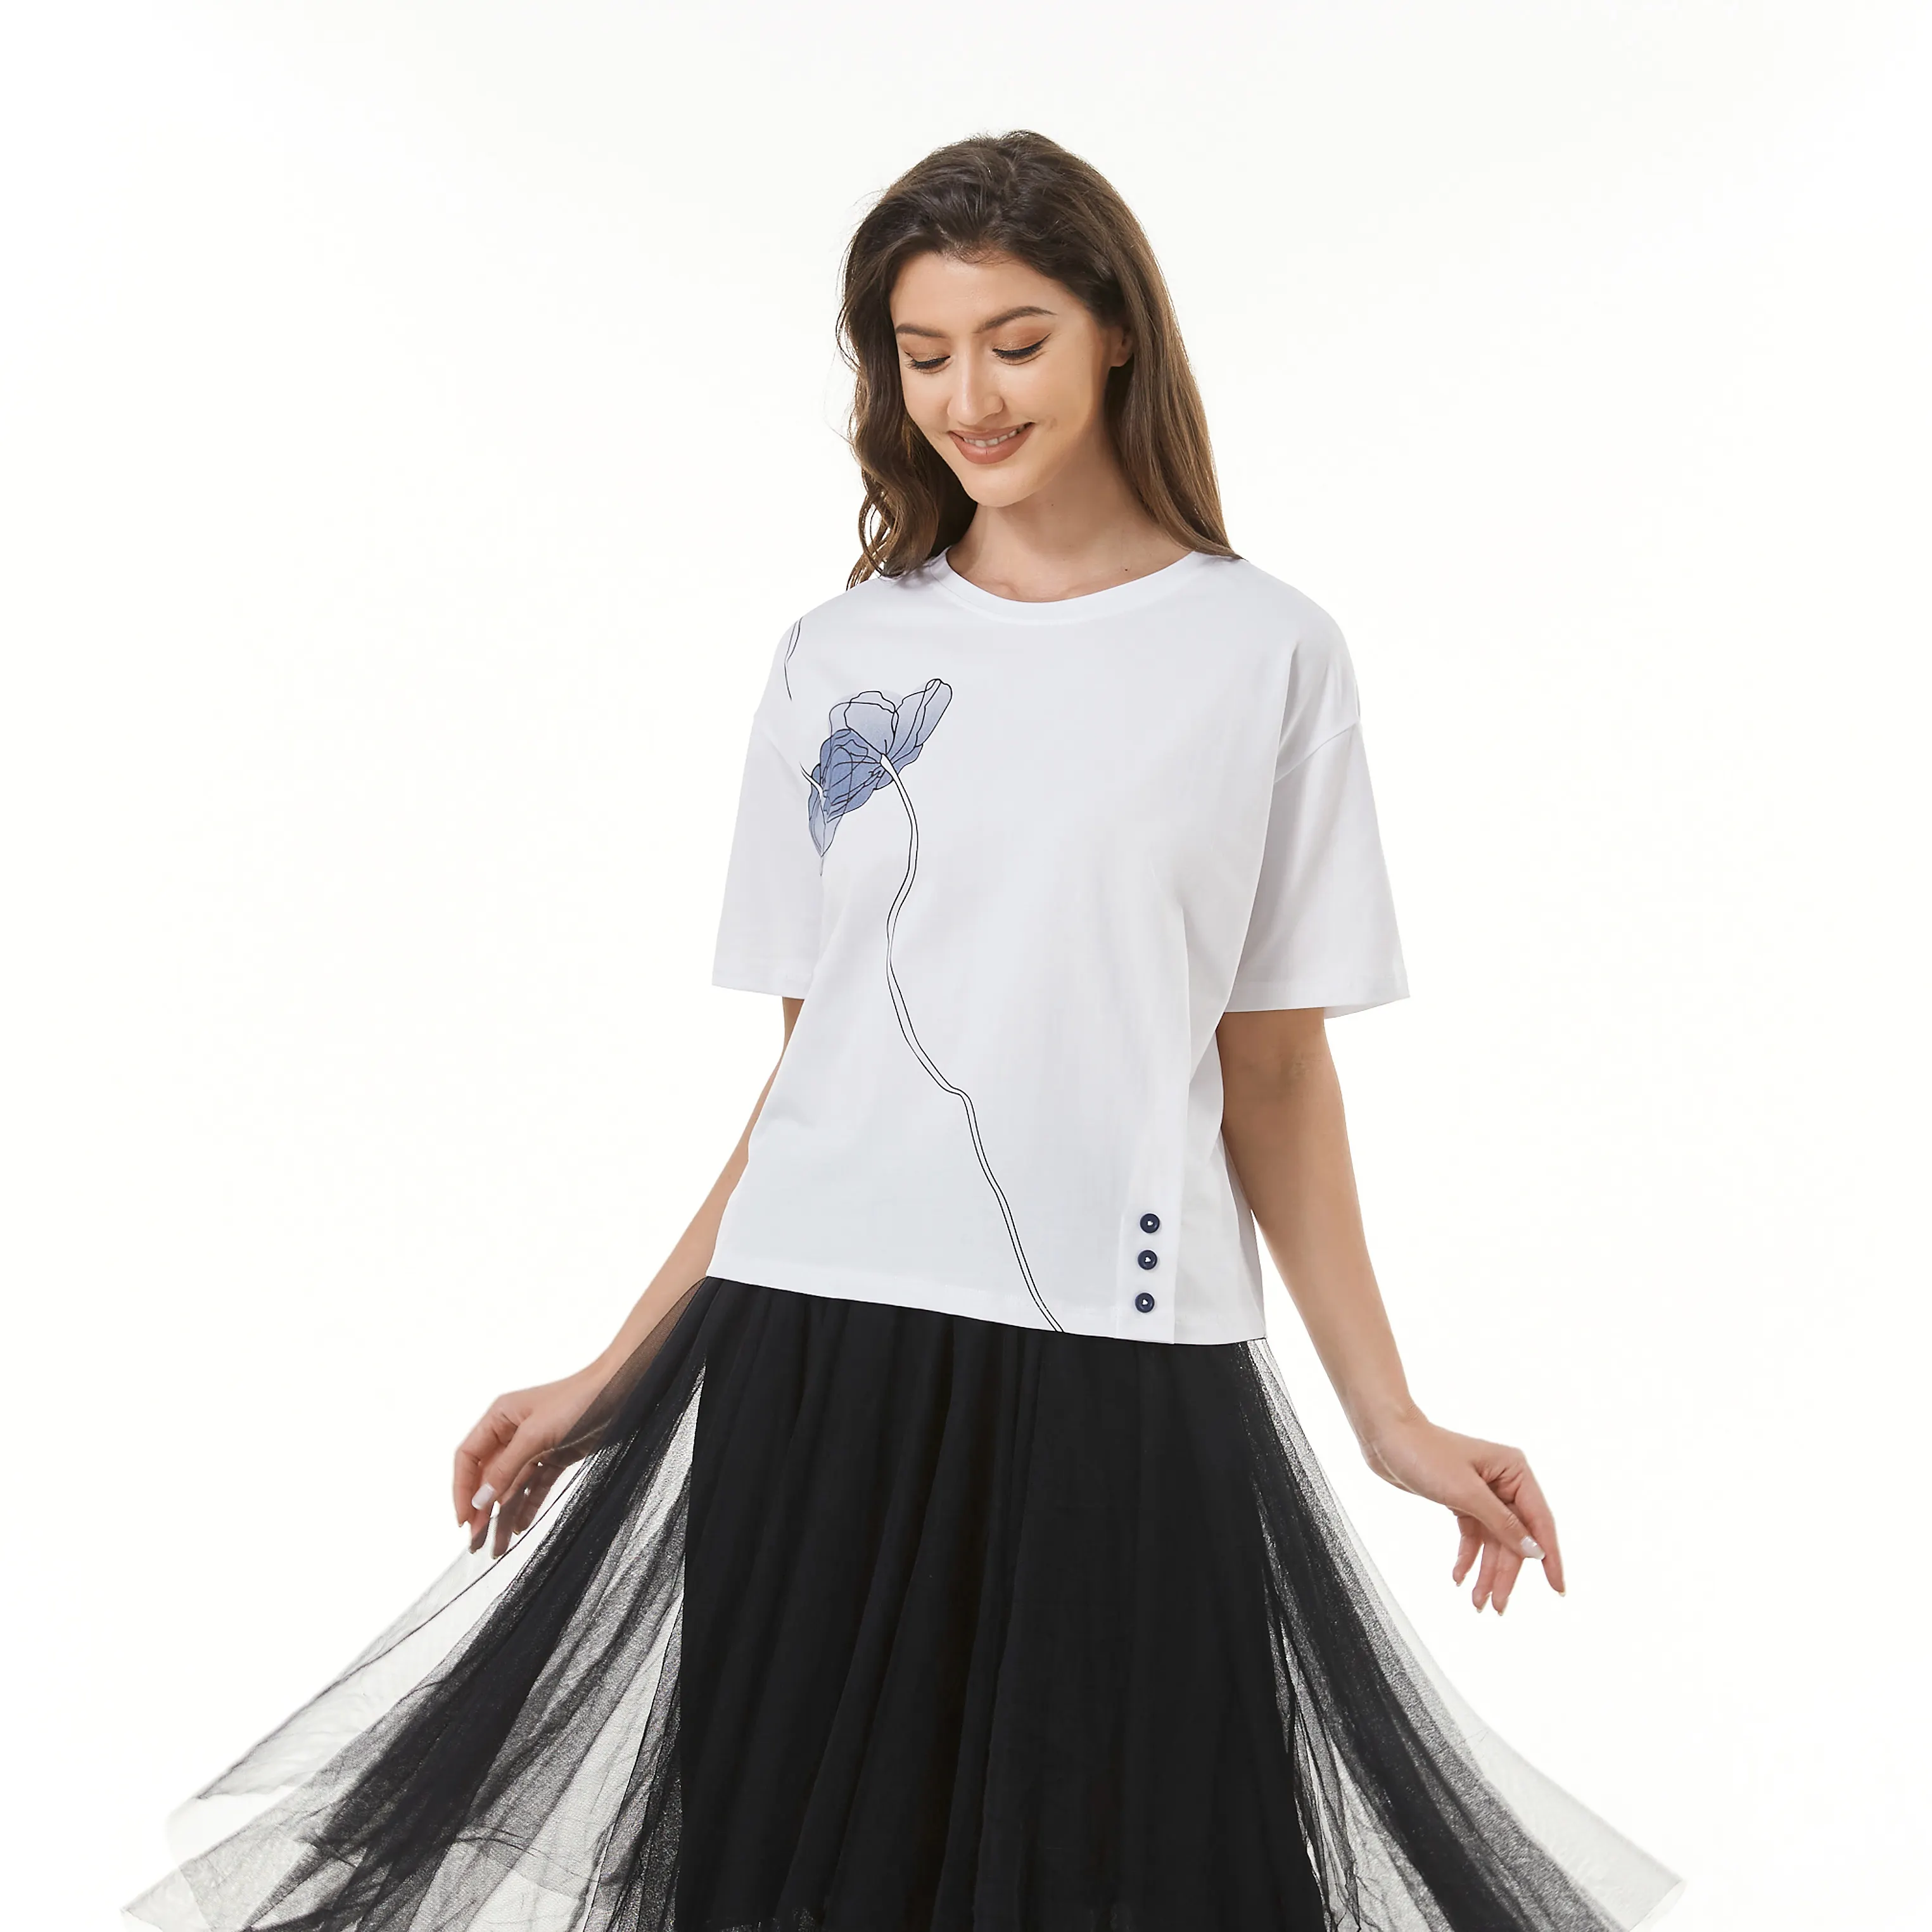 Cotton tops Fashion Hot Sale New design Drop shoulder Round neck Women's t-shirts